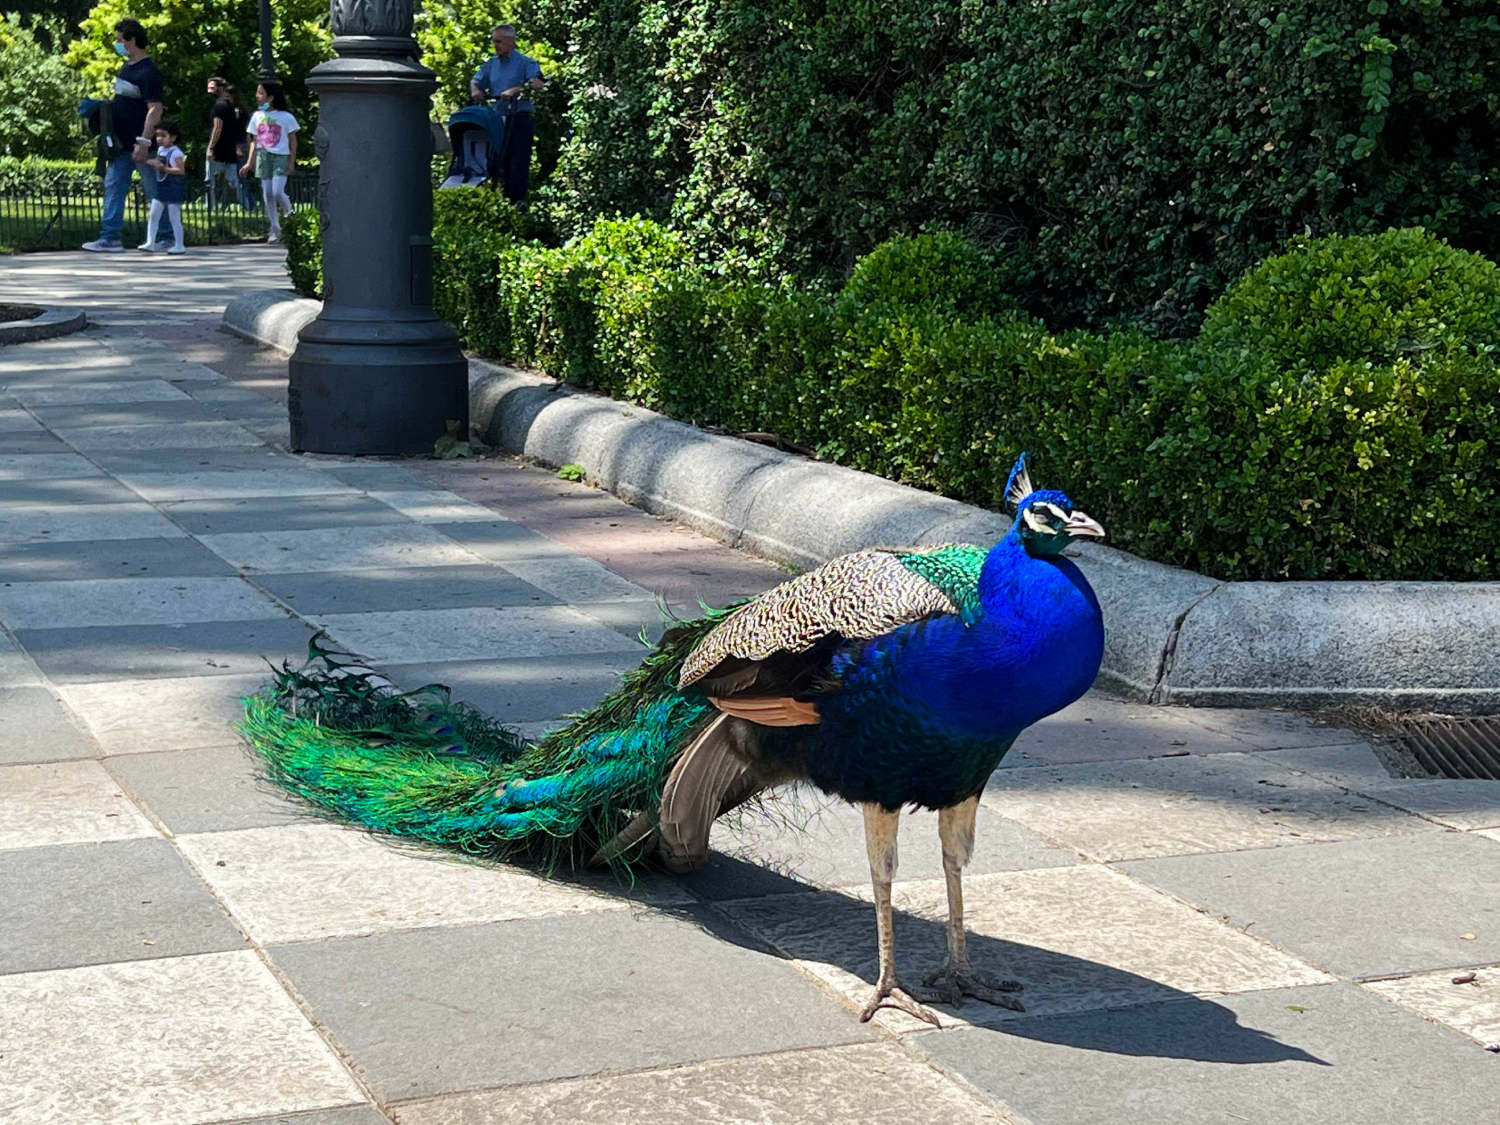 Stunning Blue Peacock, El Retiro Park, Madrid, Spain